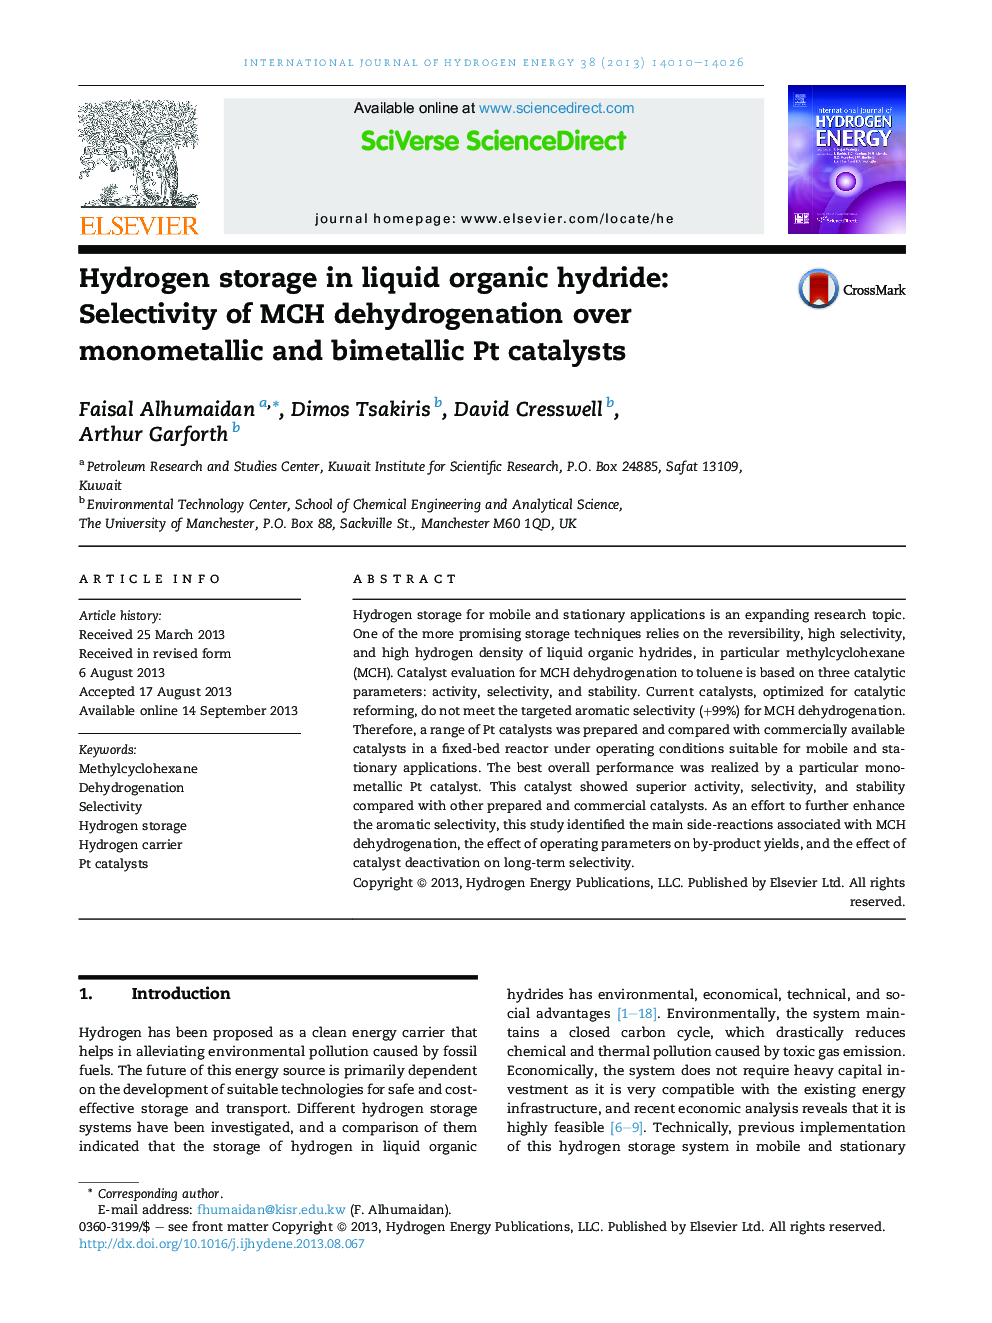 Hydrogen storage in liquid organic hydride: Selectivity of MCH dehydrogenation over monometallic and bimetallic Pt catalysts